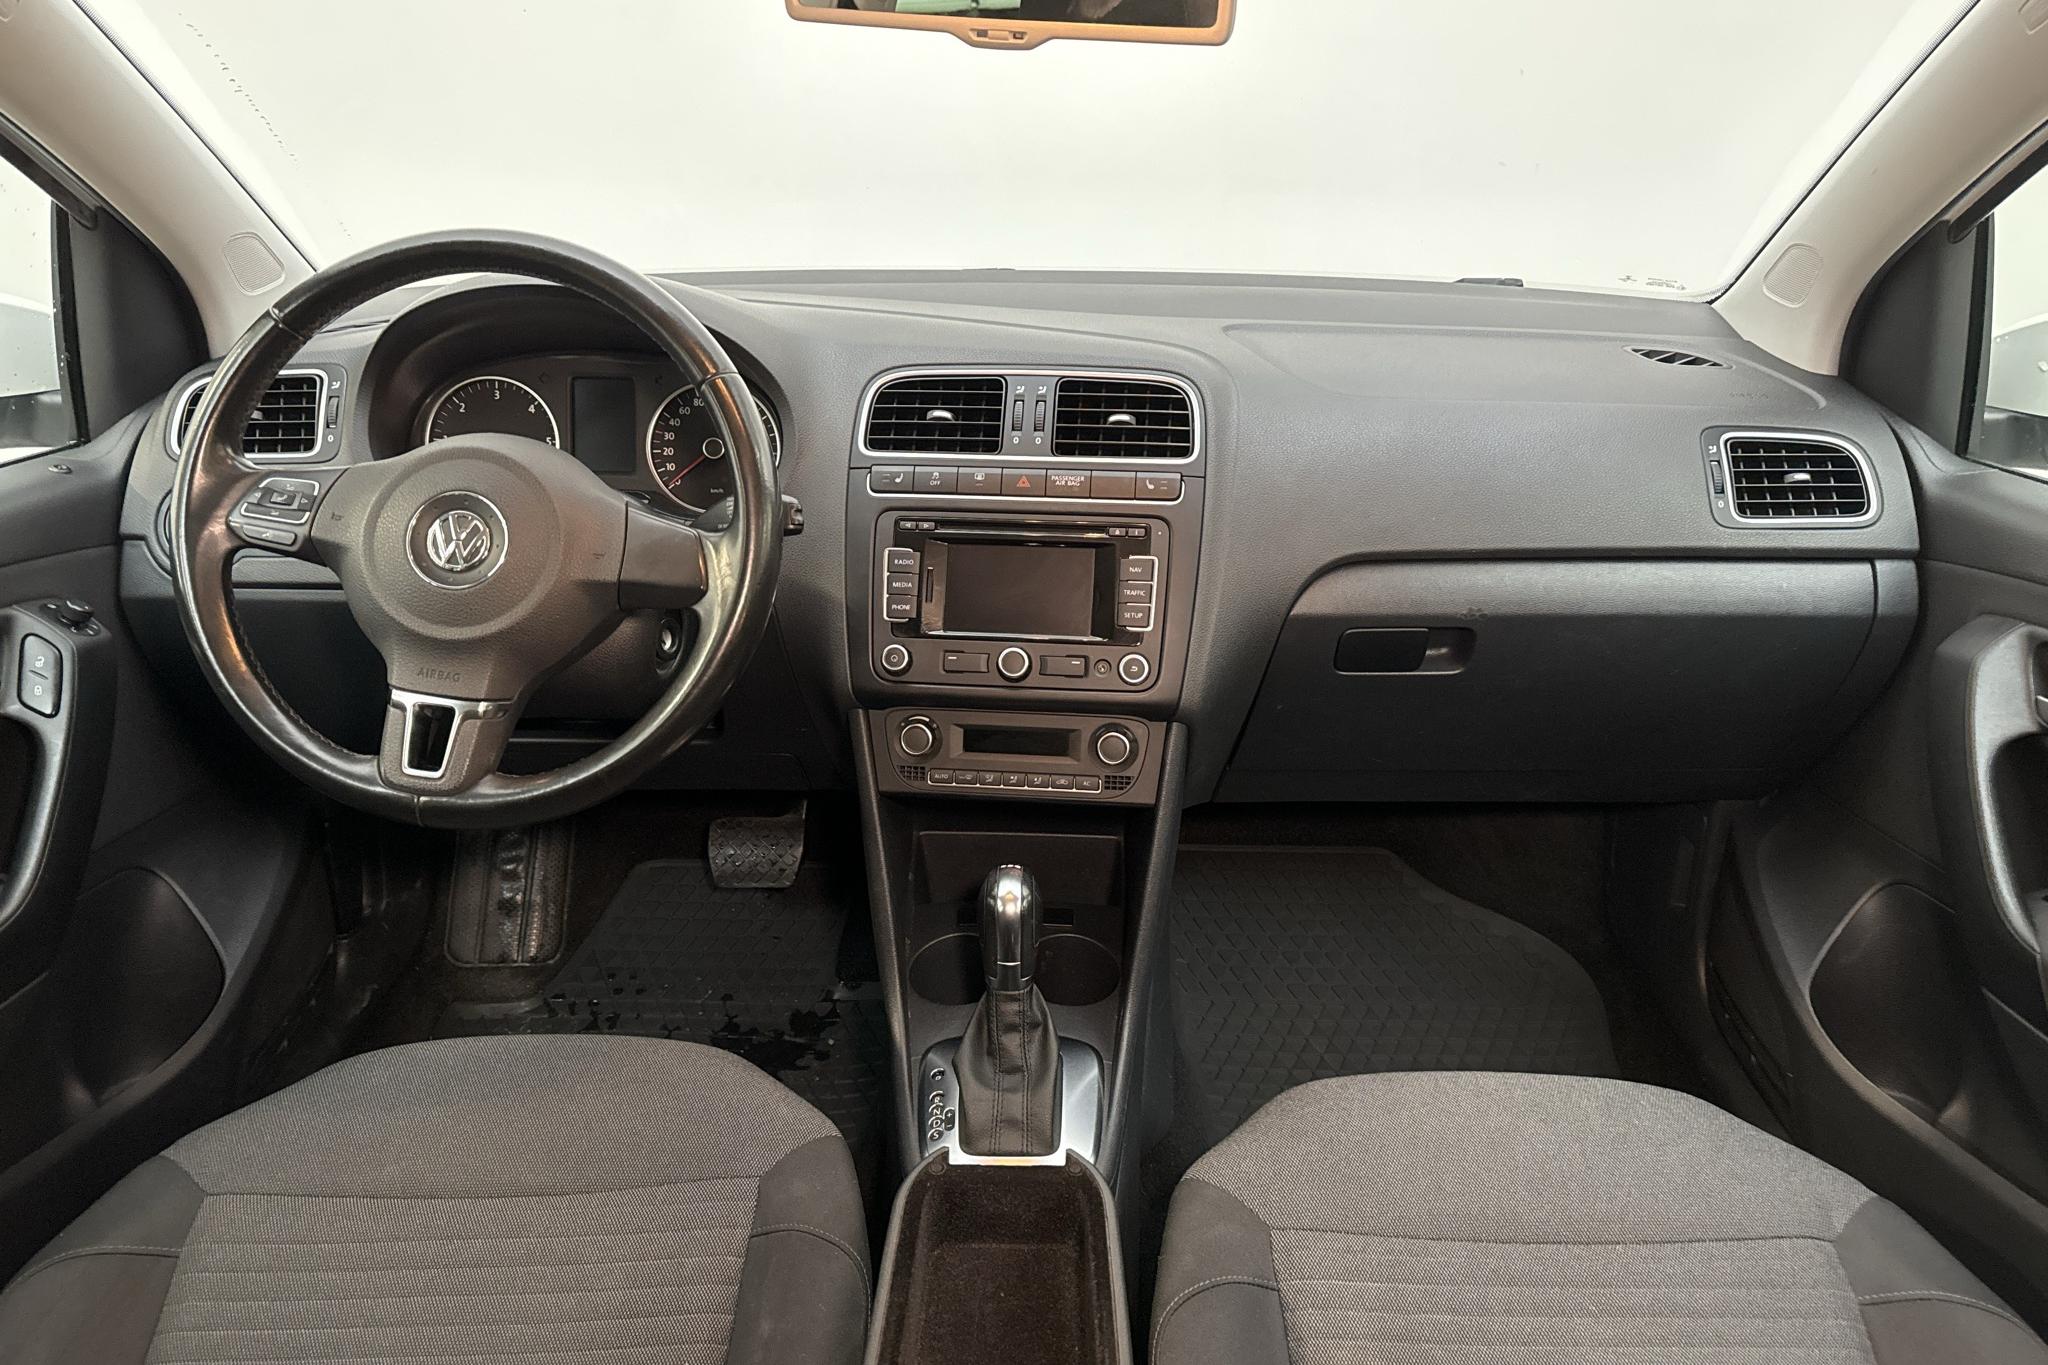 VW Polo 1.6 TDI 5dr (90hk) - 181 190 km - Automaattinen - valkoinen - 2012